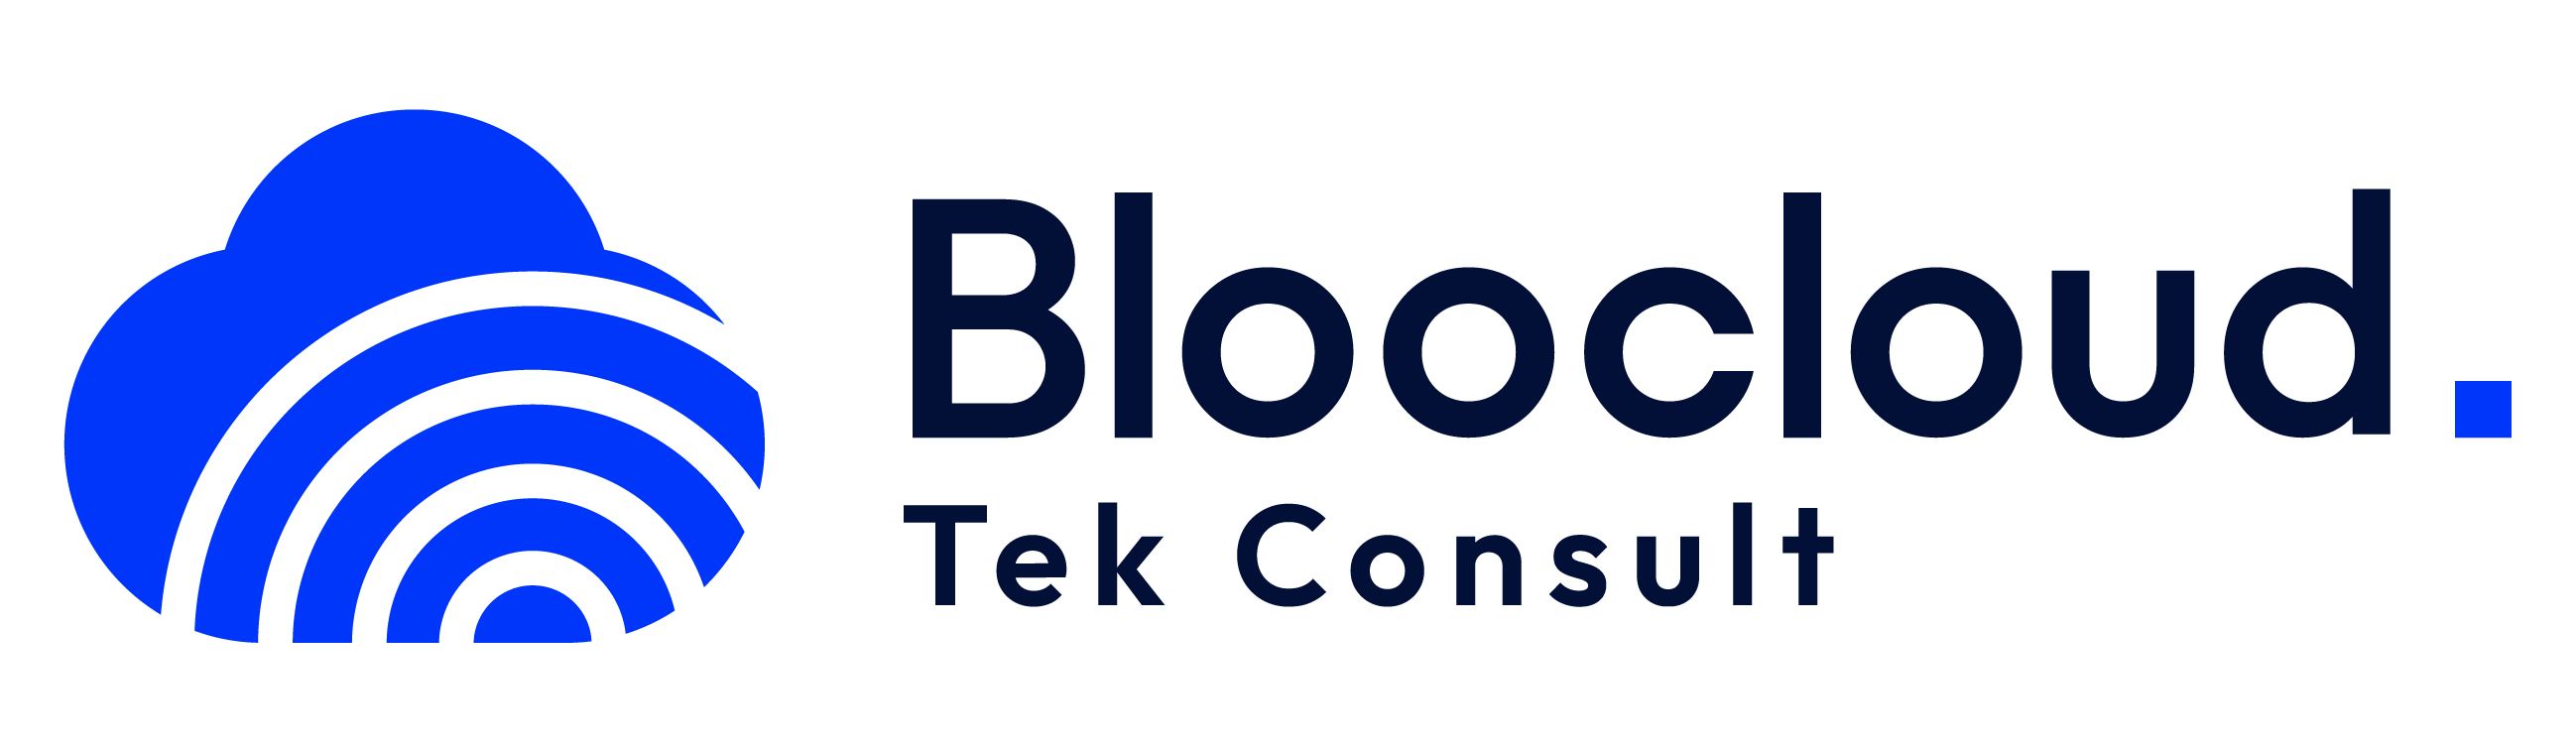 Bloo Cloud Tek Consult